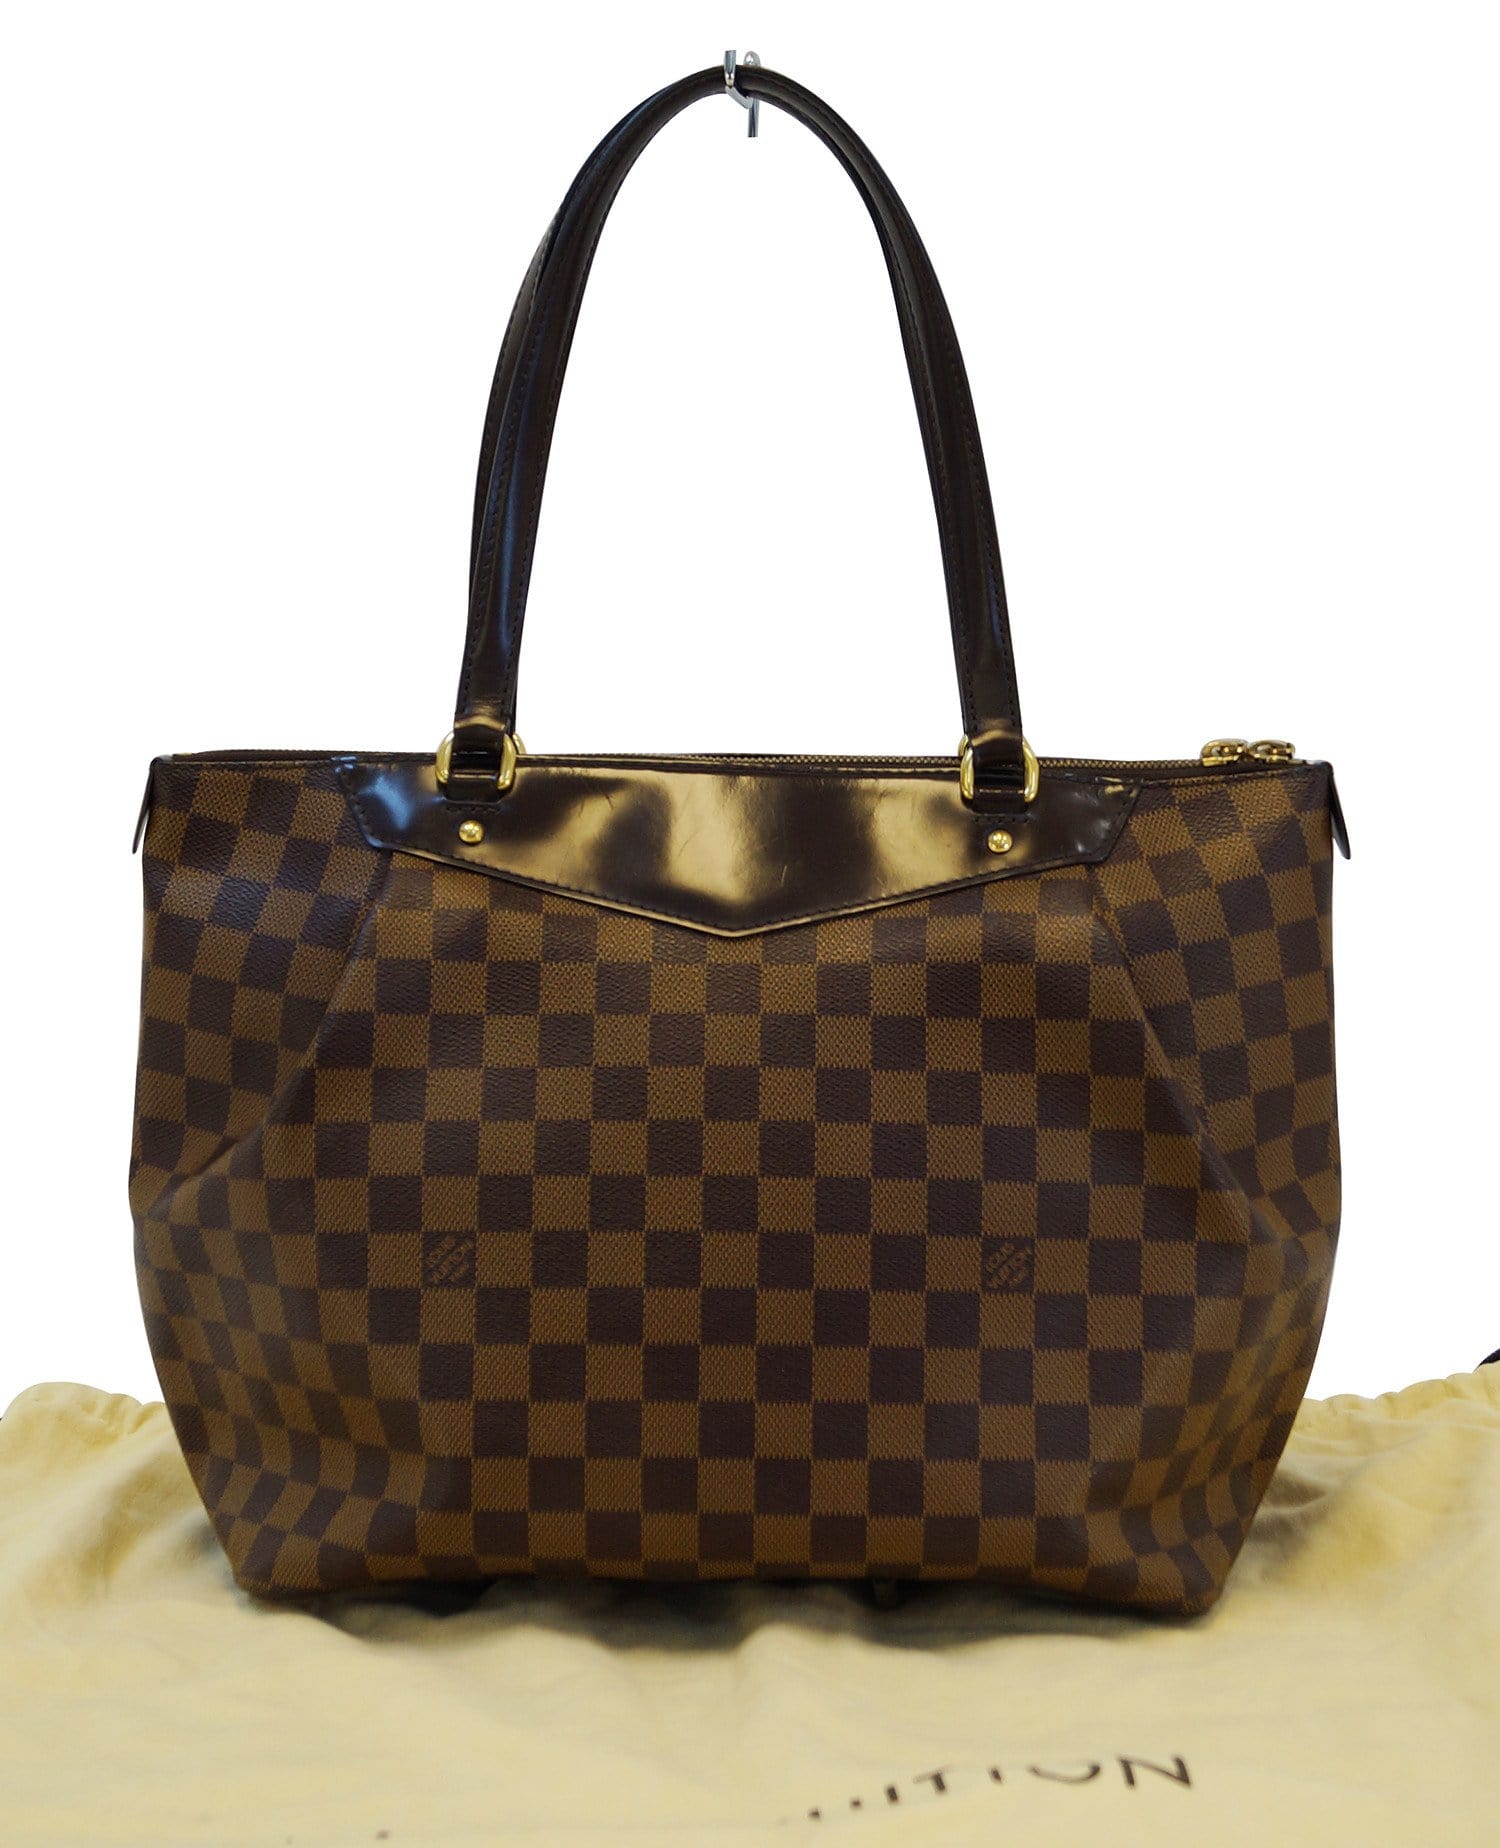 Louis Vuitton Westminster Handbag Damier Pm At 1stdibs